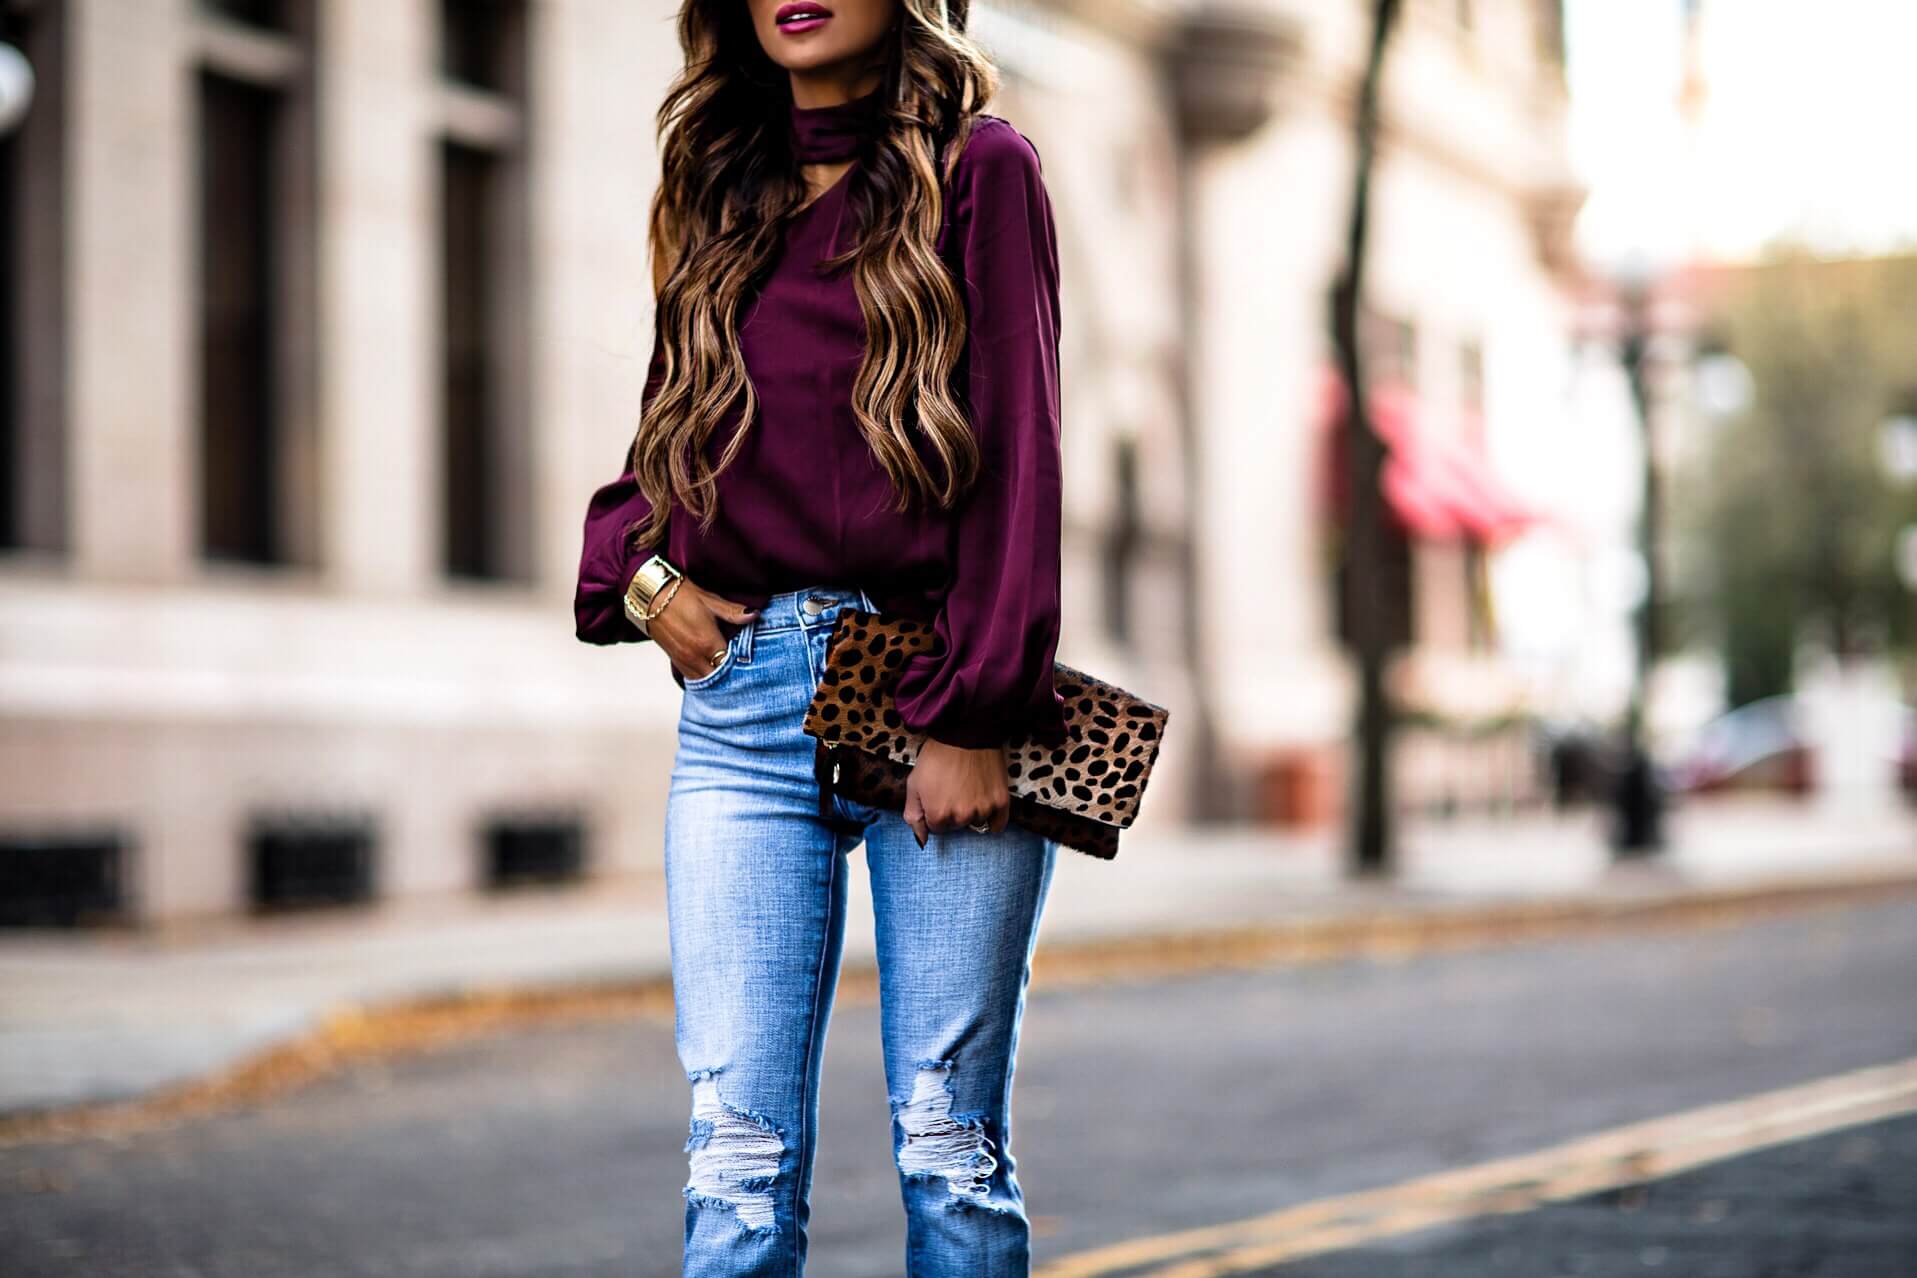 fashion blogger mia mia mine wearing l'agence denim intermix and a purple top for fall